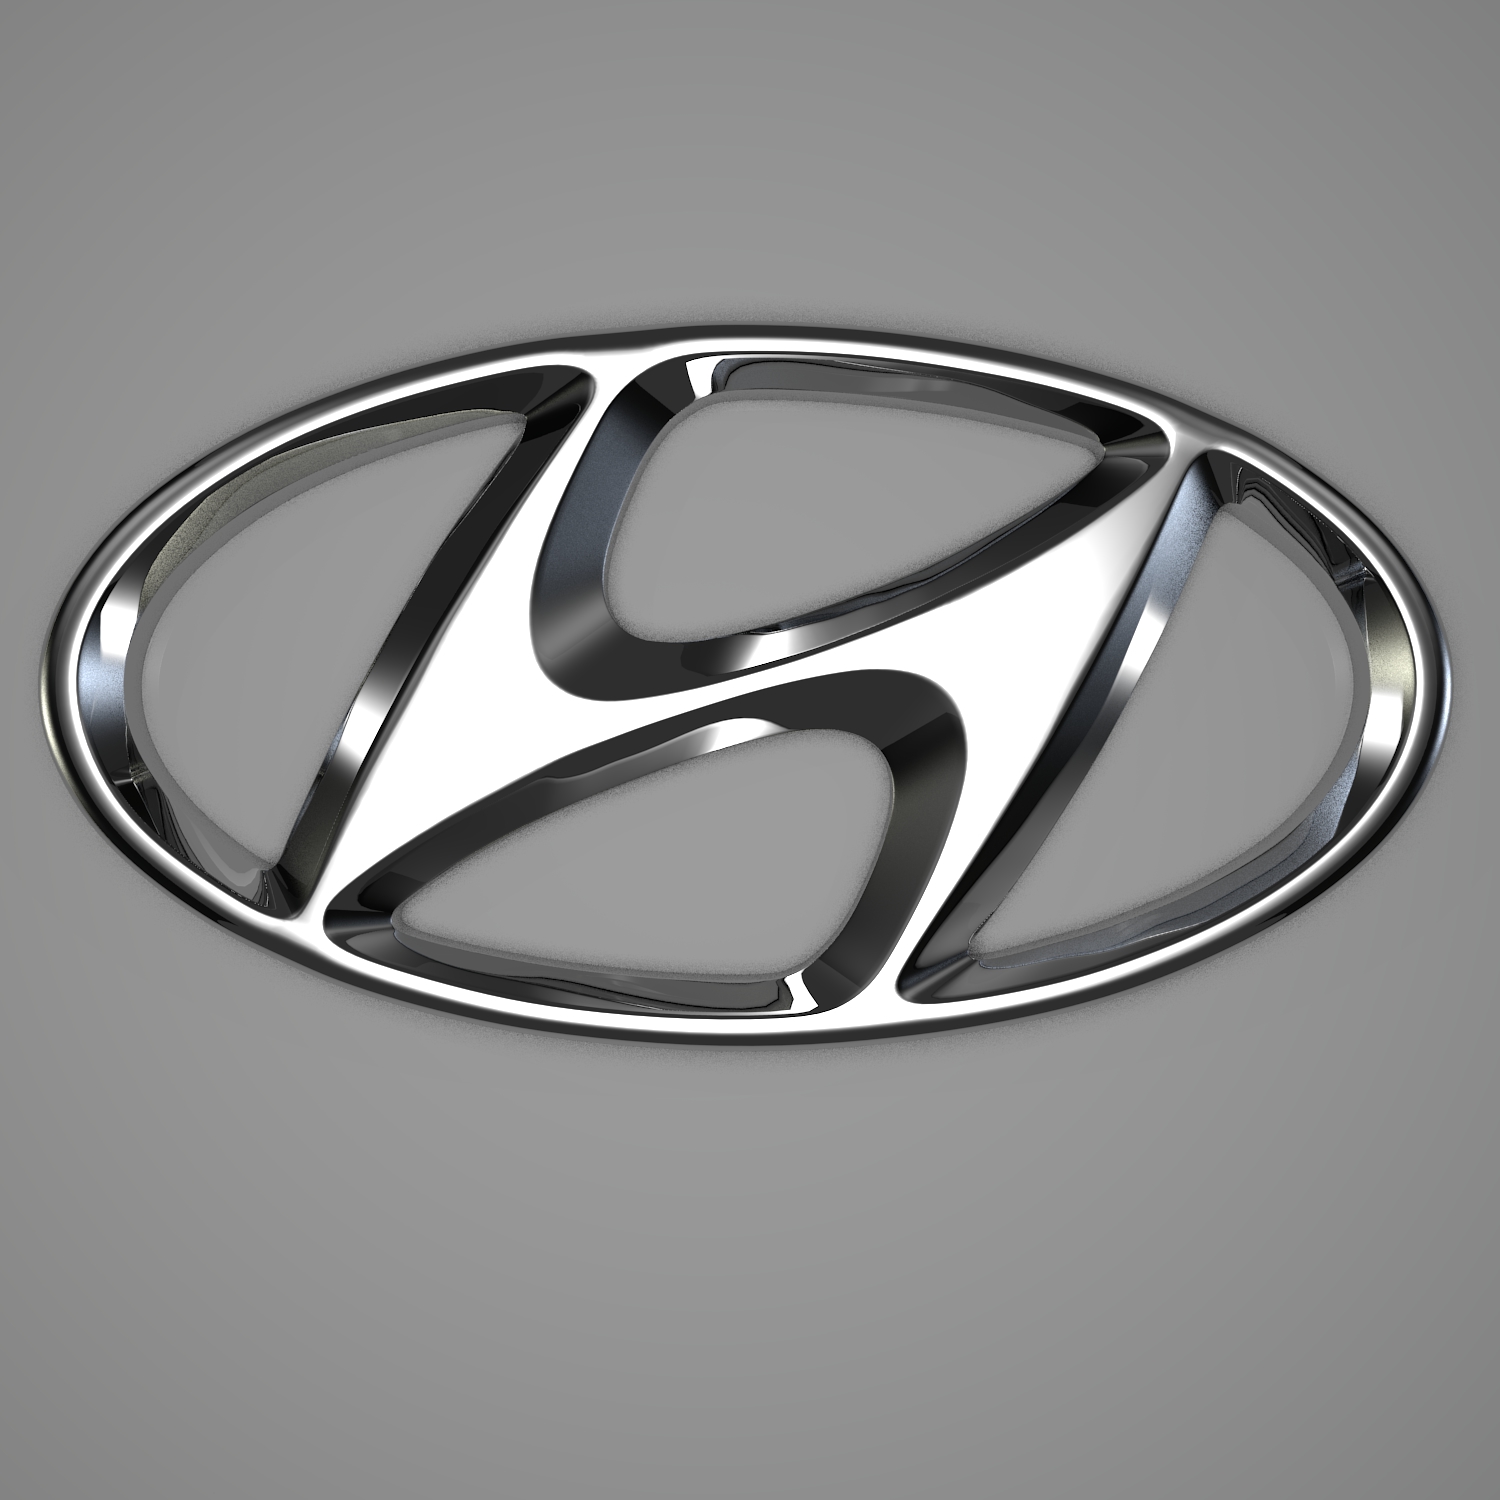 hyundai logo 3d model blend obj 116208